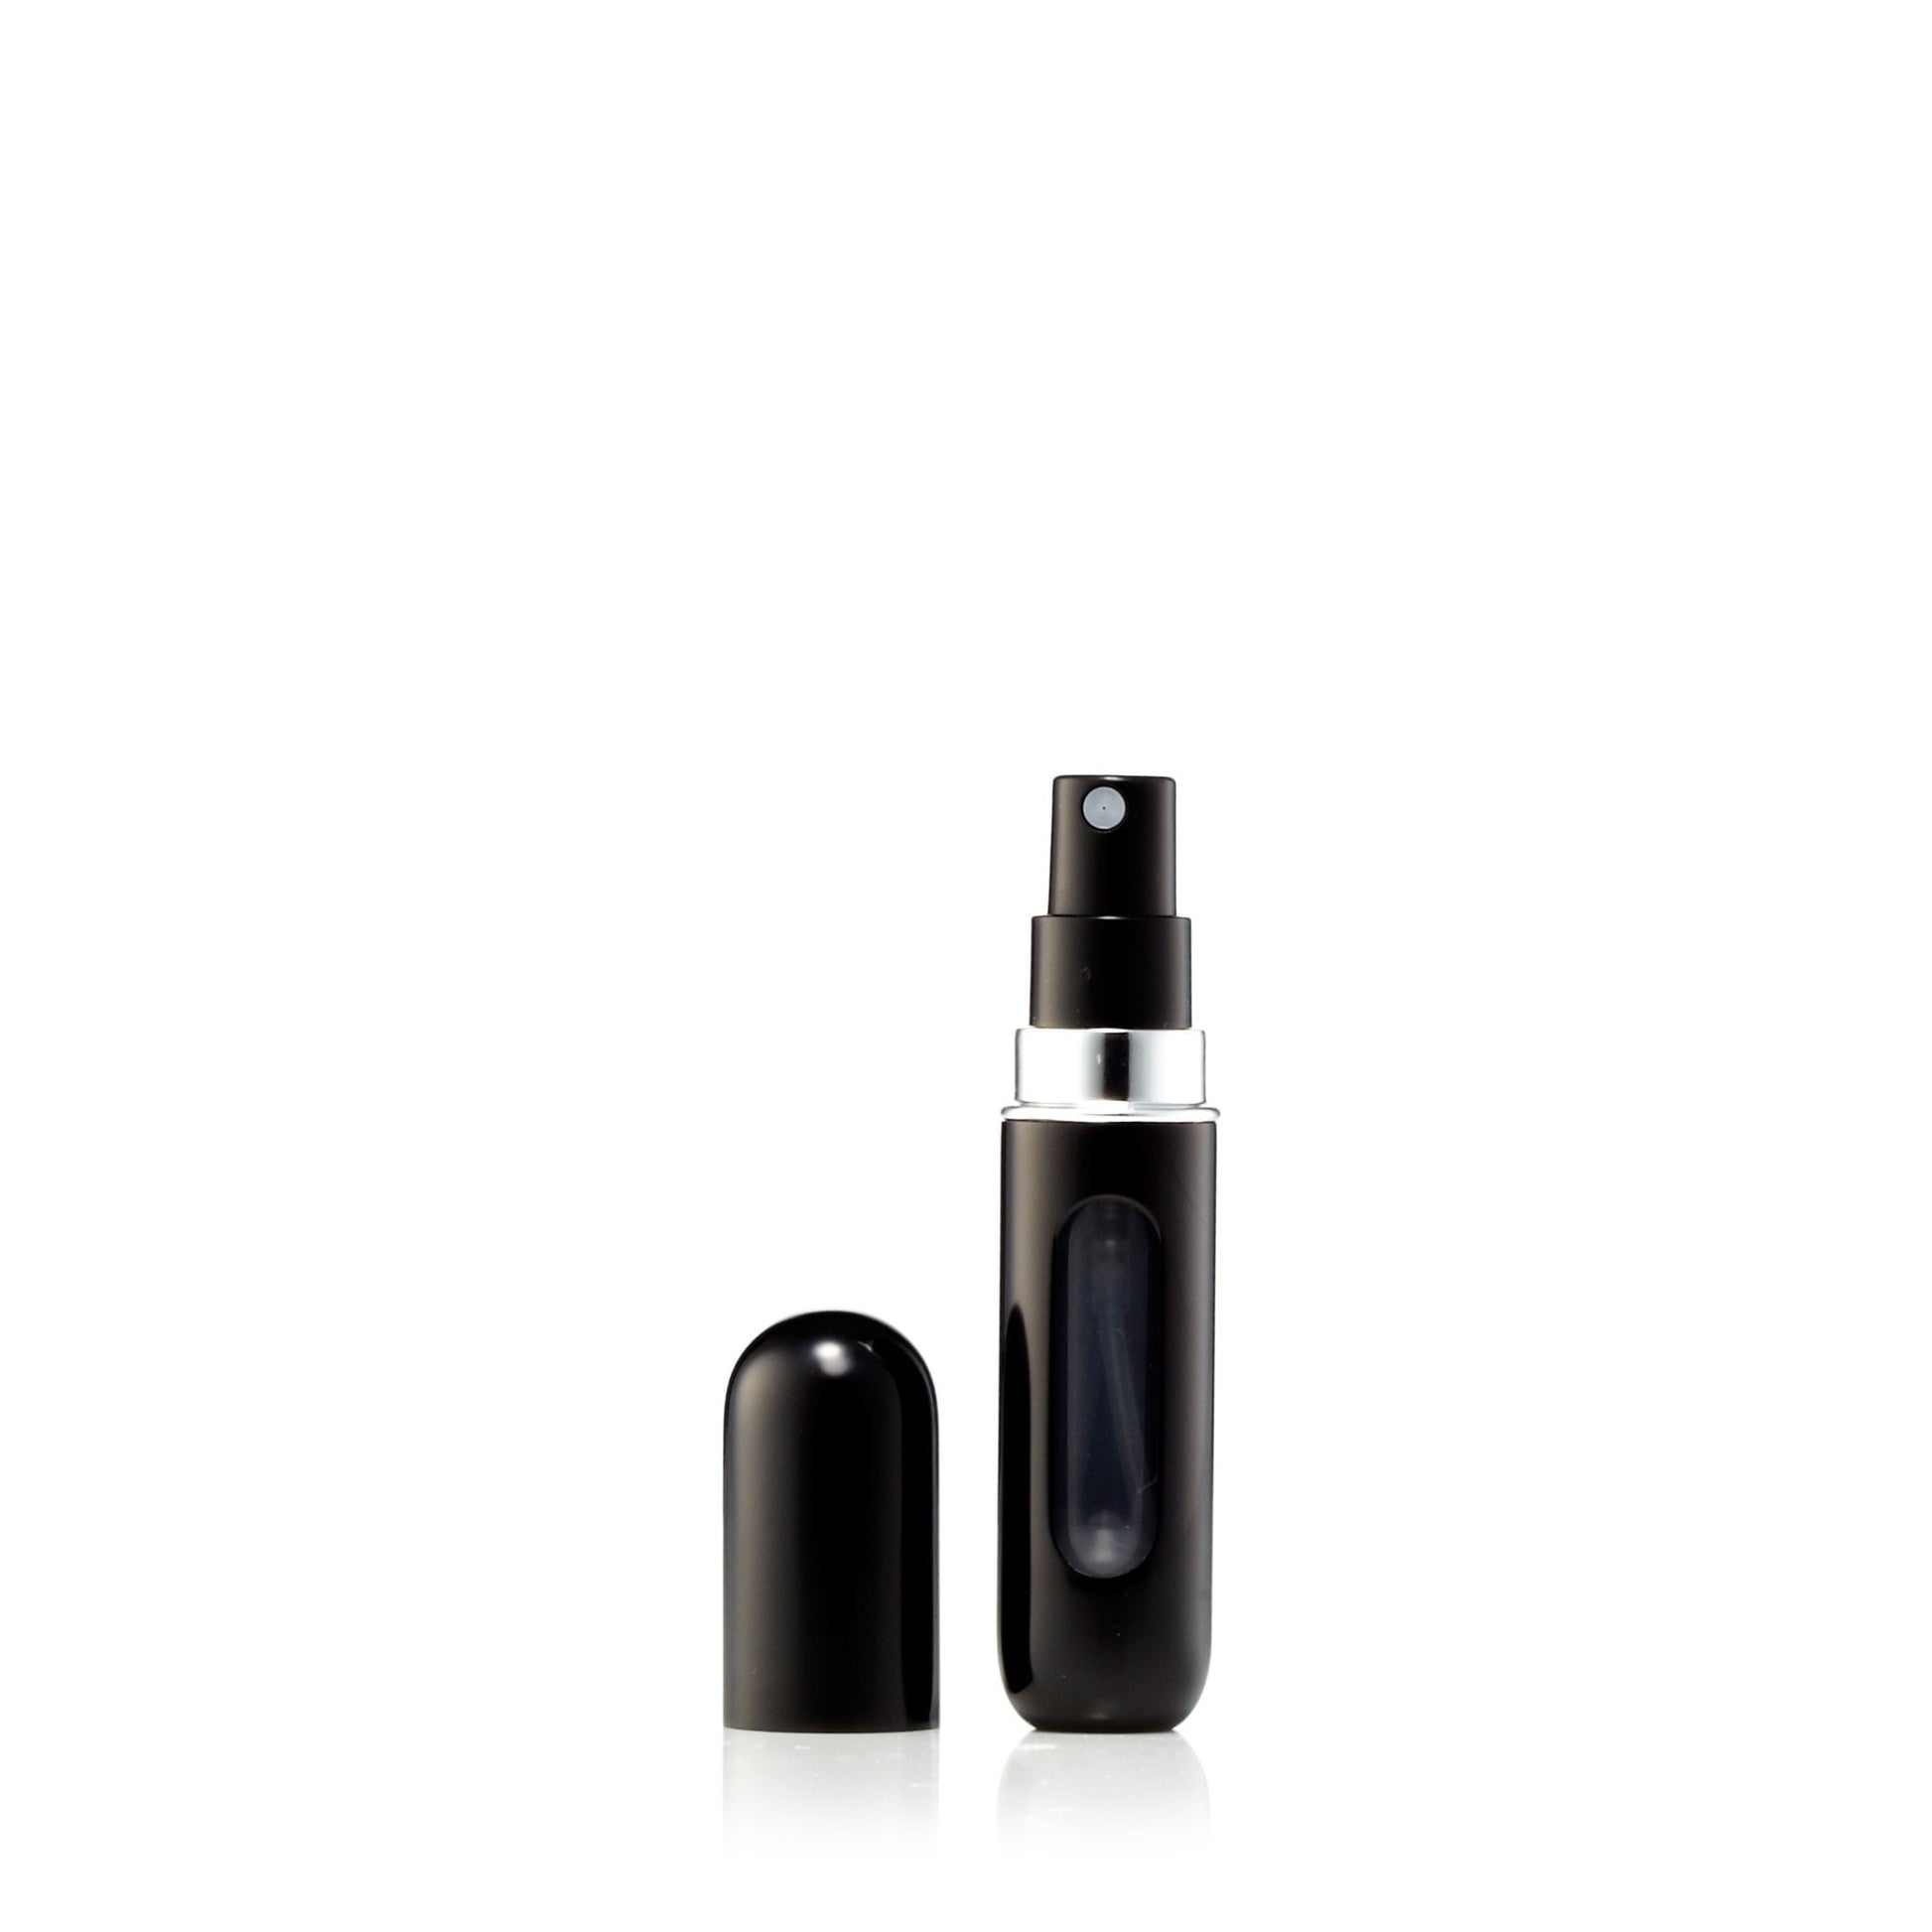 Travalo Refillable Fragrance Spray Atomizer Atomizer Unisex Accessories Black Click to open in modal